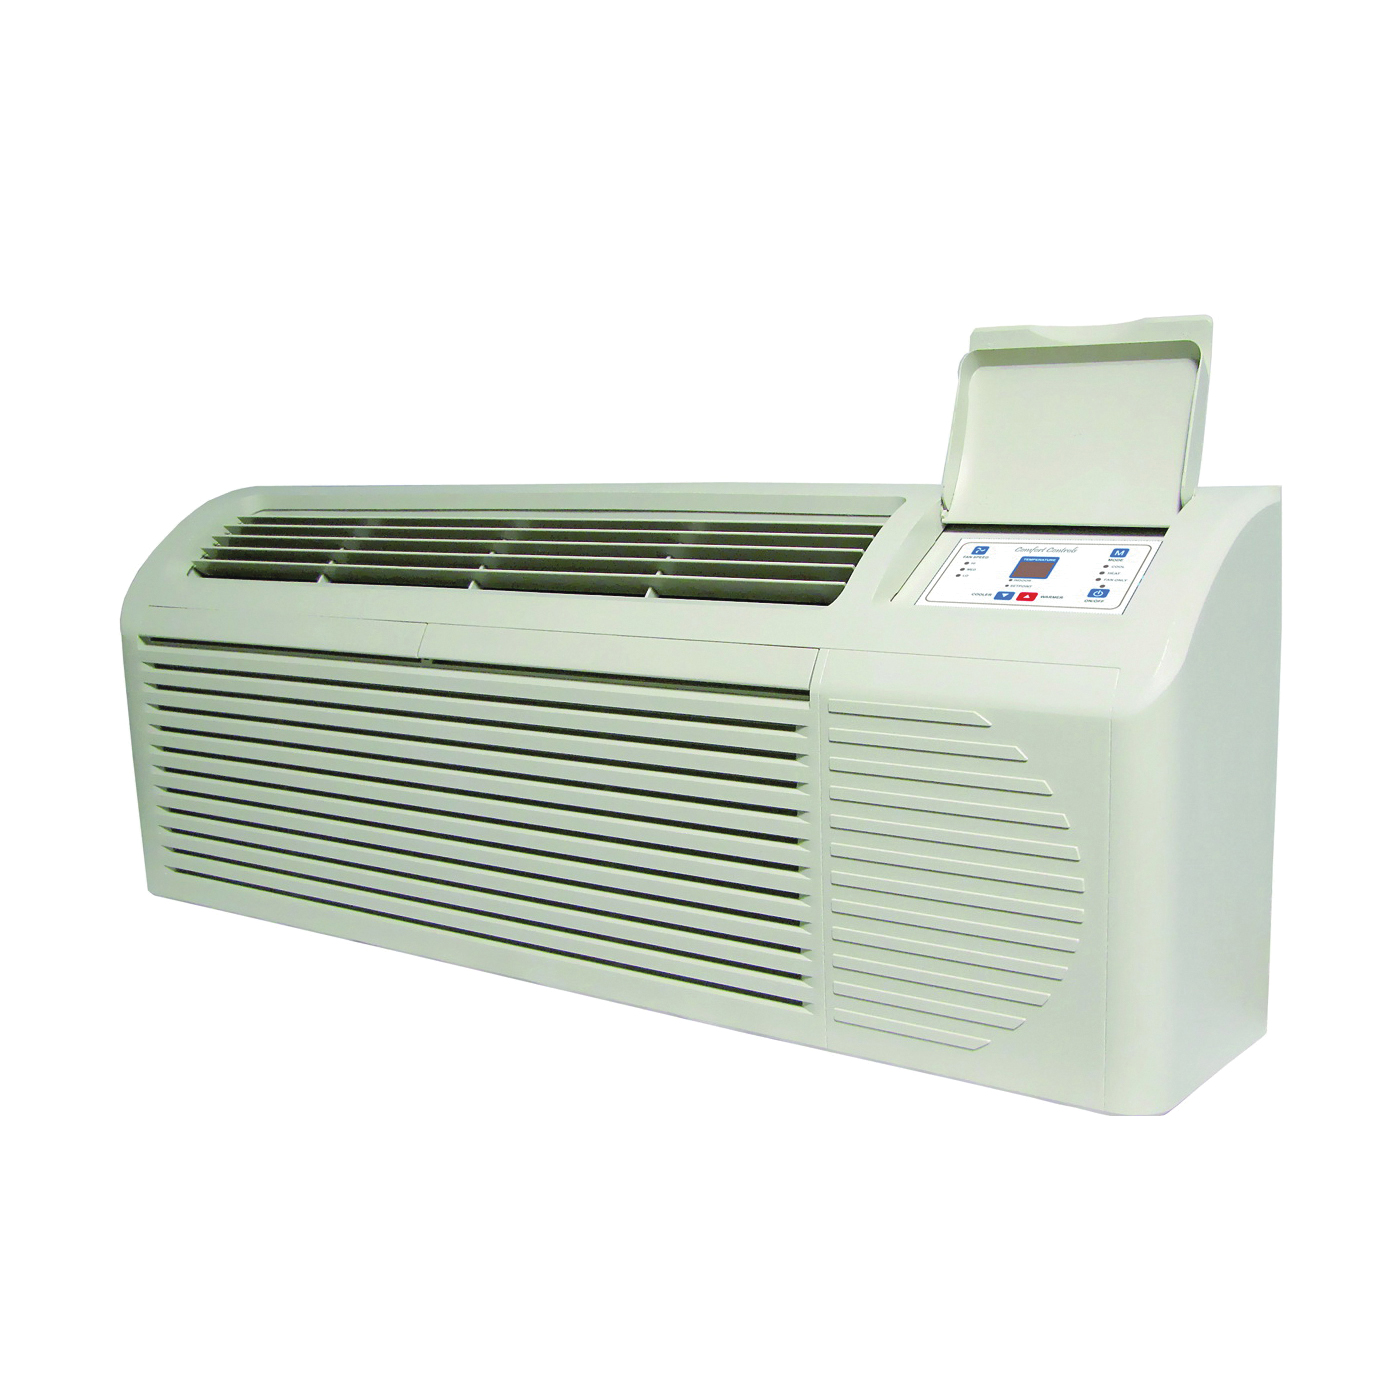 PTAC EKTC12-1G-3-KIT Air Conditioner Kit, 208/230 V, 12,000 Btu Cooling, 10,700 Btu/hr Heating